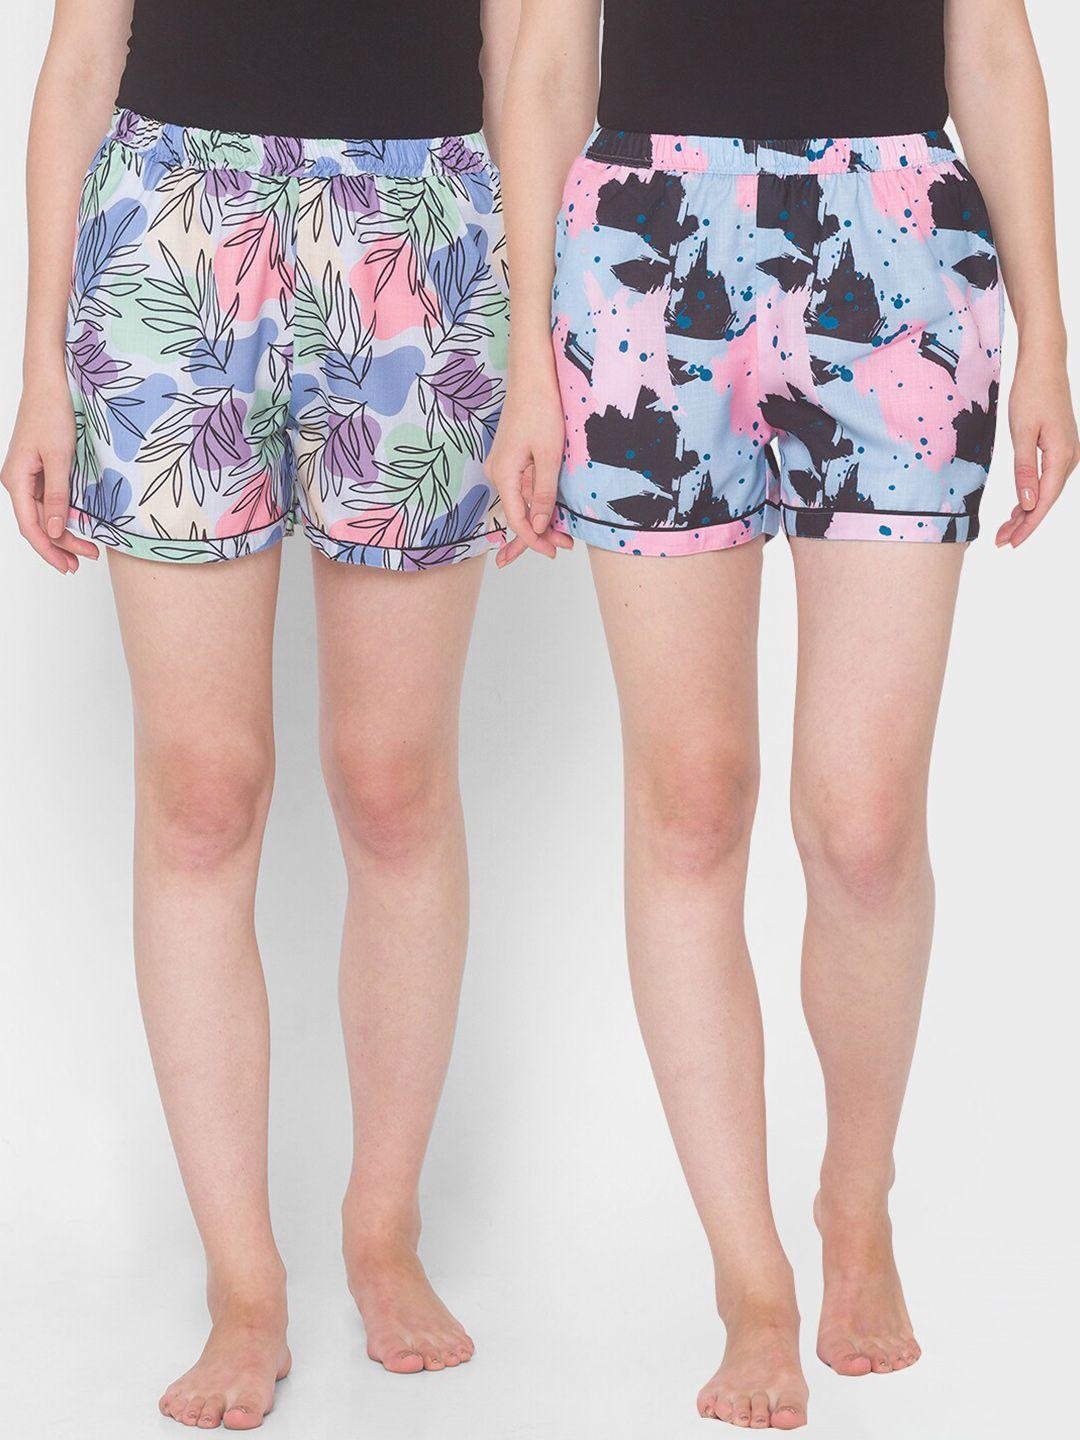 fashionrack-women-pack-of-2-blue-&-pink-printed-cotton-lounge-shorts